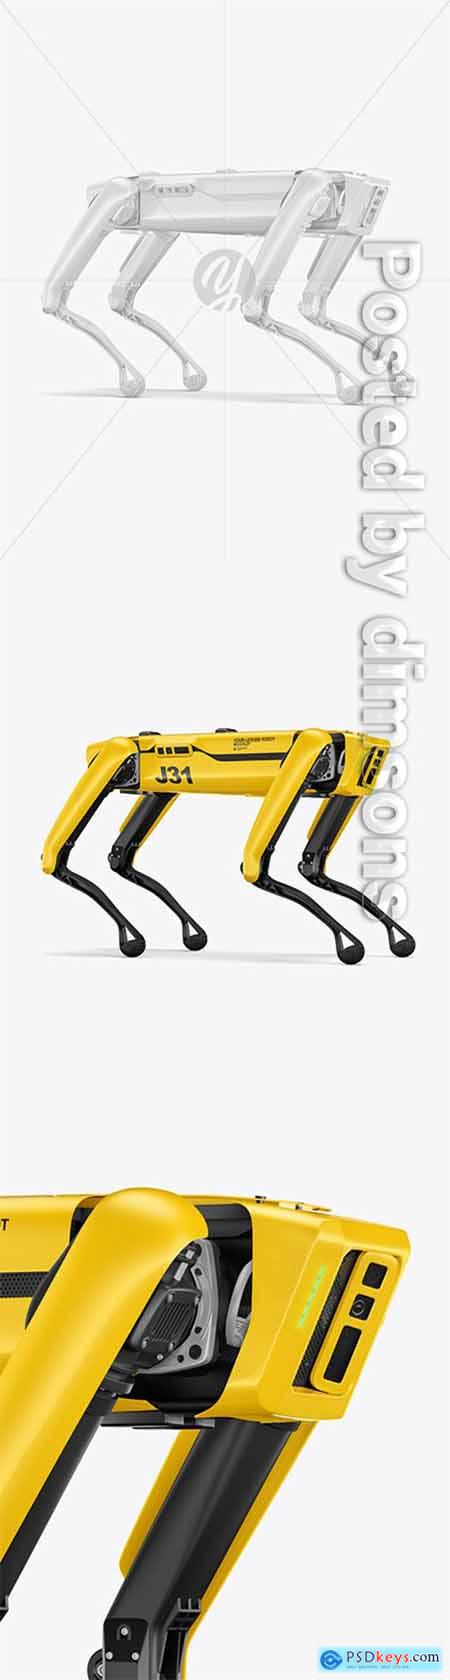 Four-Legged Robot Mockup 66077